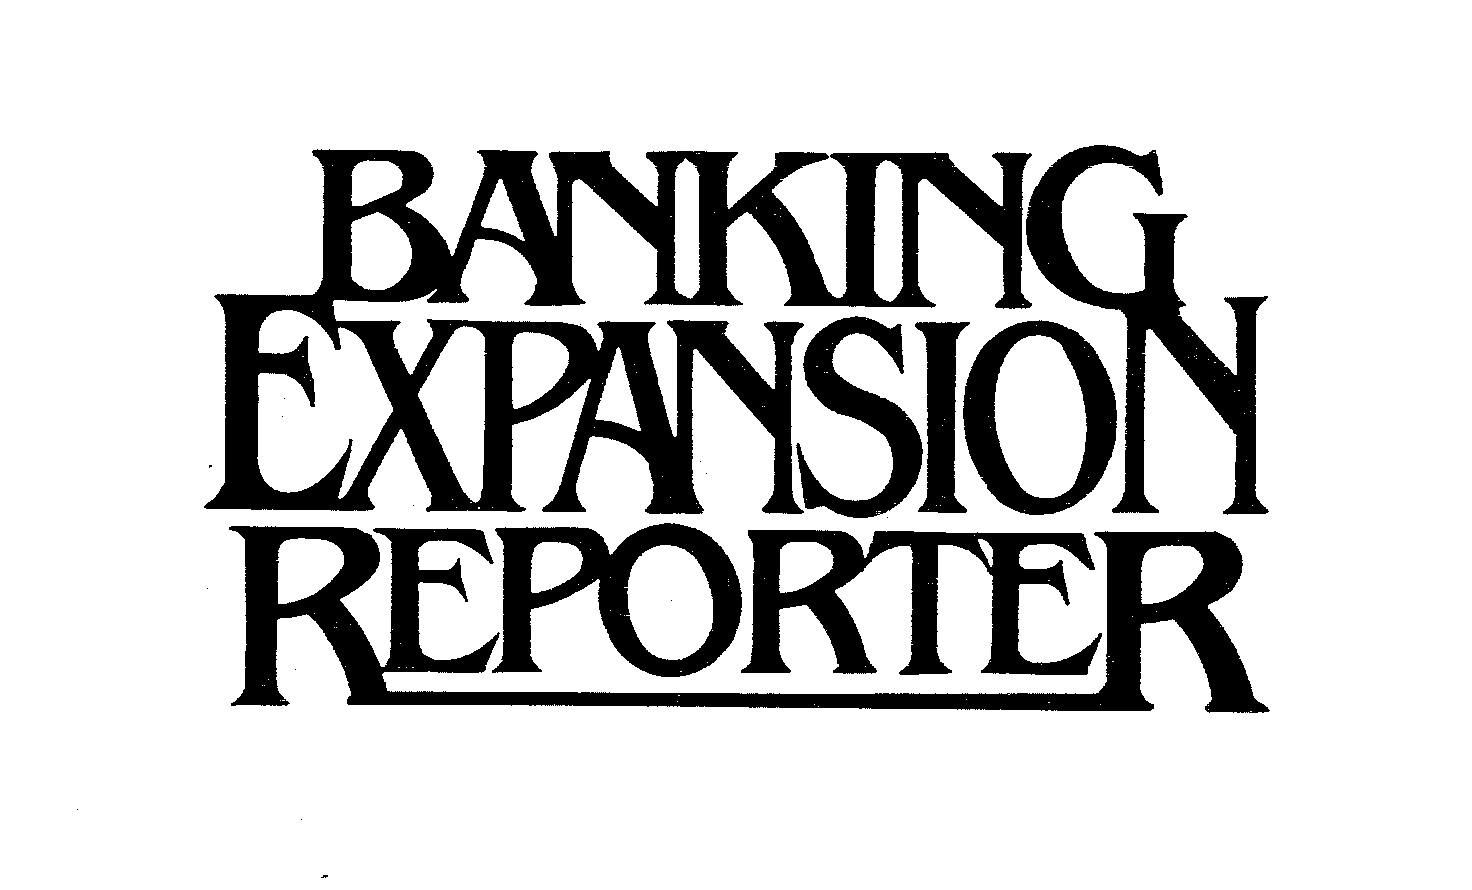  BANKING EXPANSION REPORTER